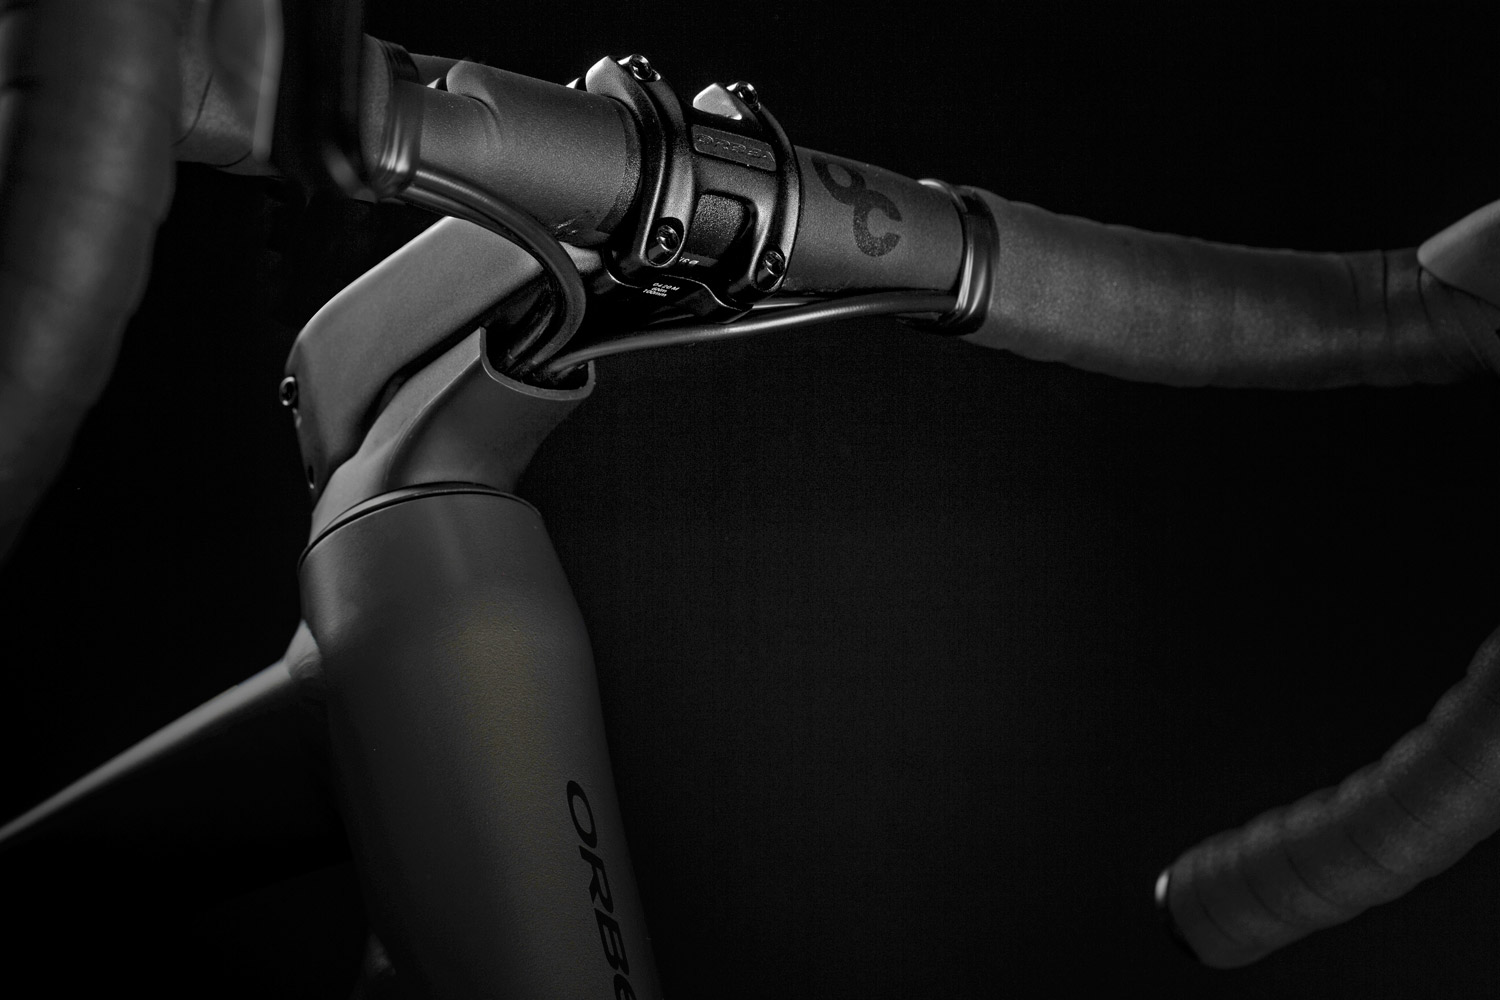 2021 Orbea Avant alloy all-road bike, affordable Avant H hydroformed aluminum alloy endurance all-road bike